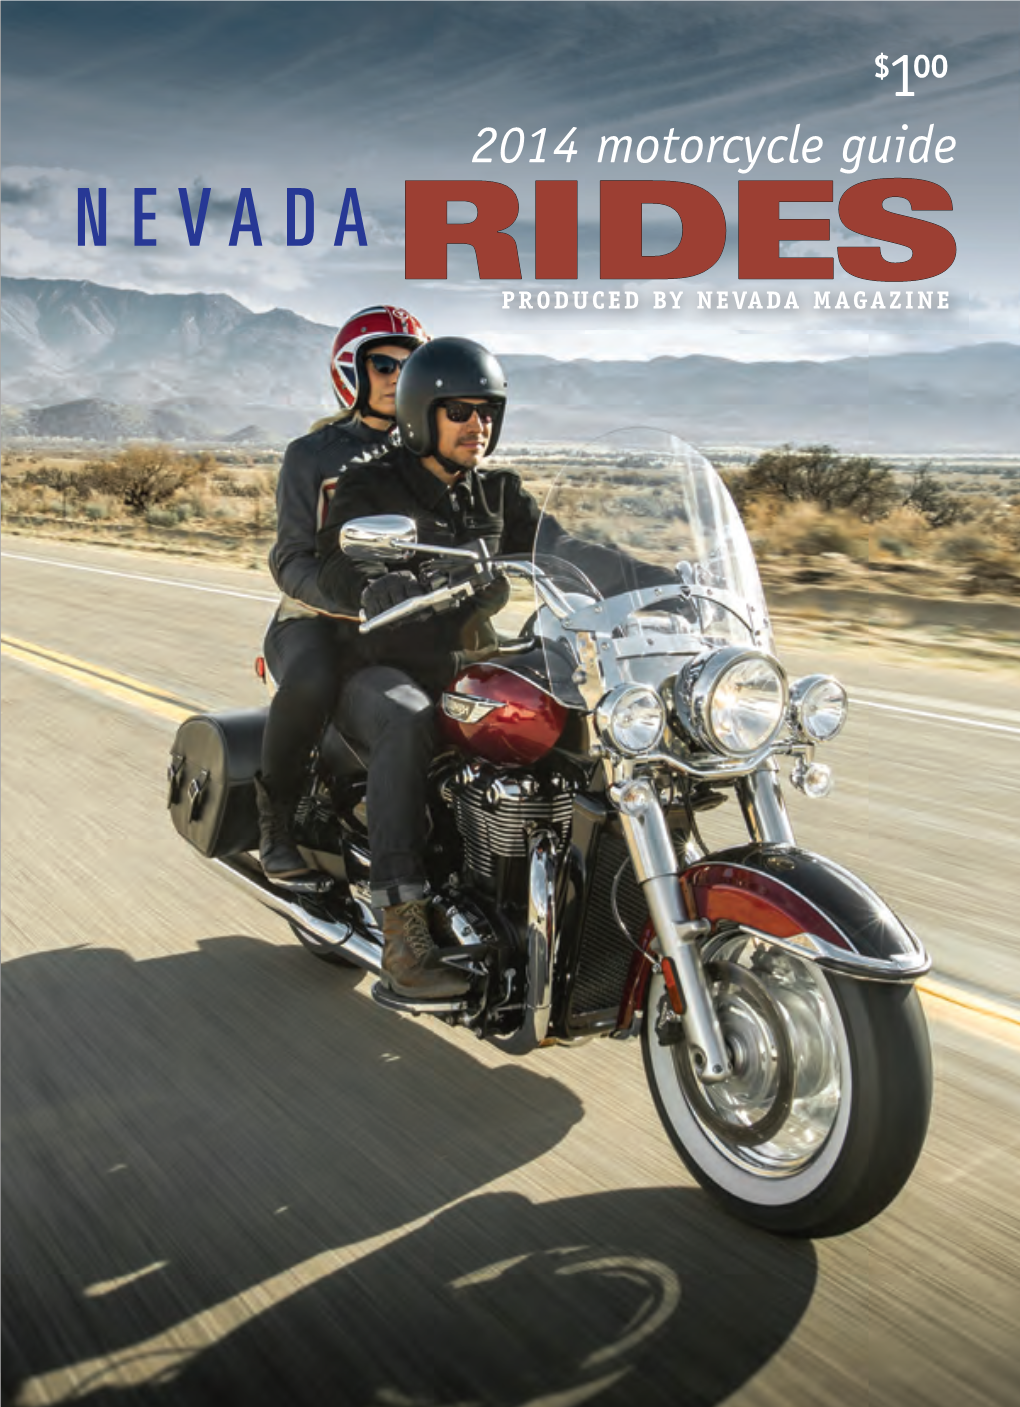 Nevada Rides Your Vacation Produced by Nevada Magazine